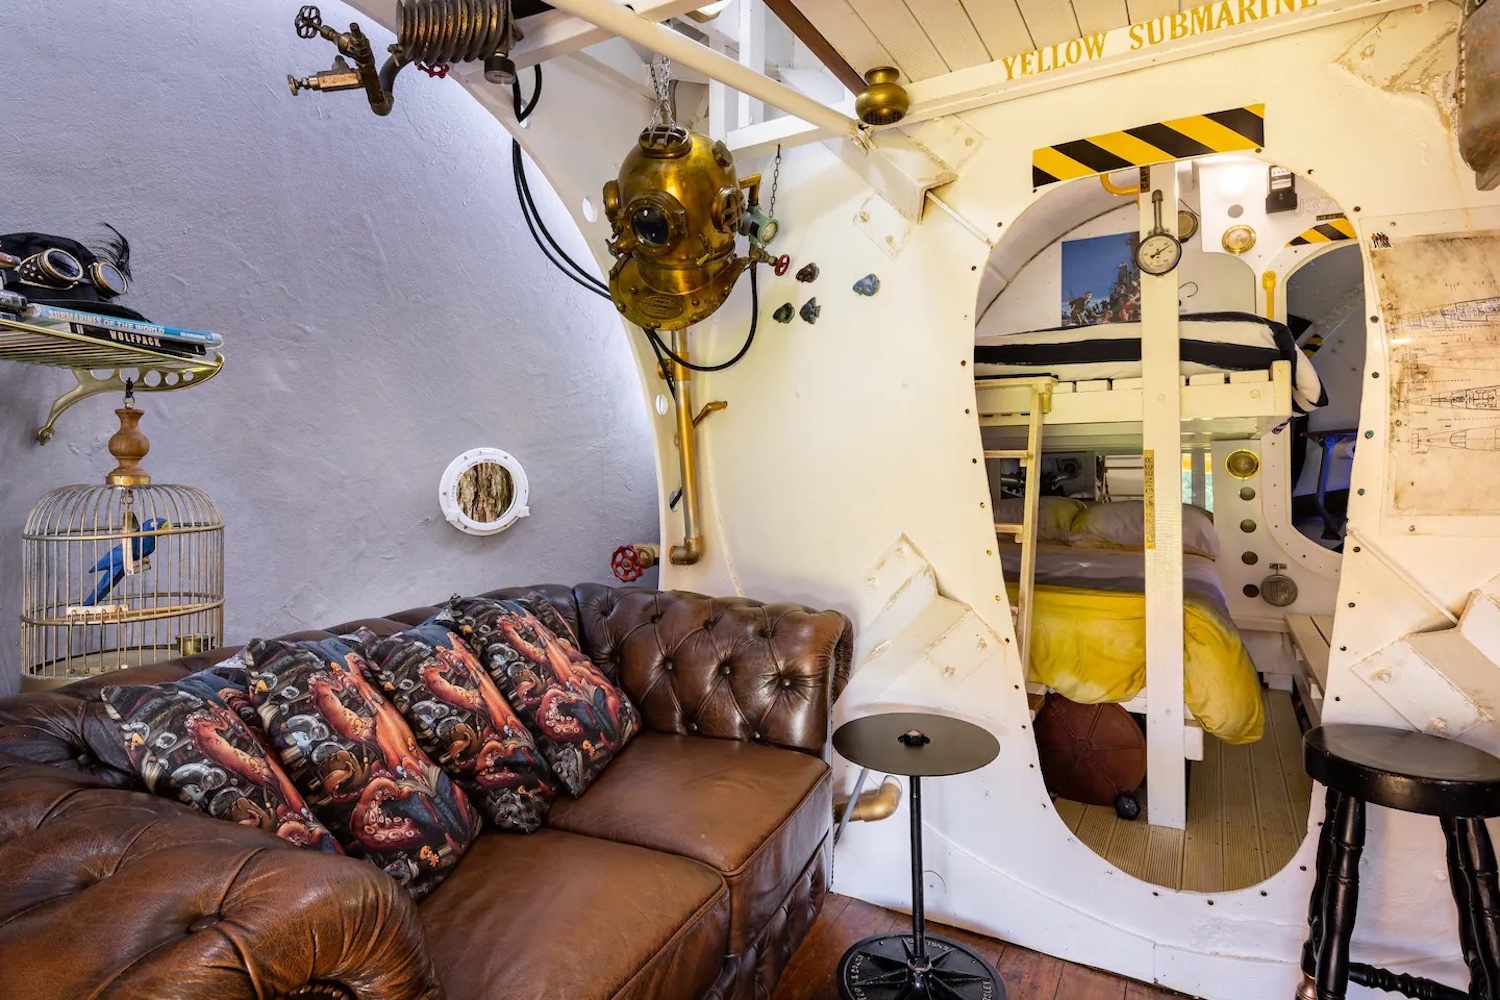 living room yellow submarine airbnb